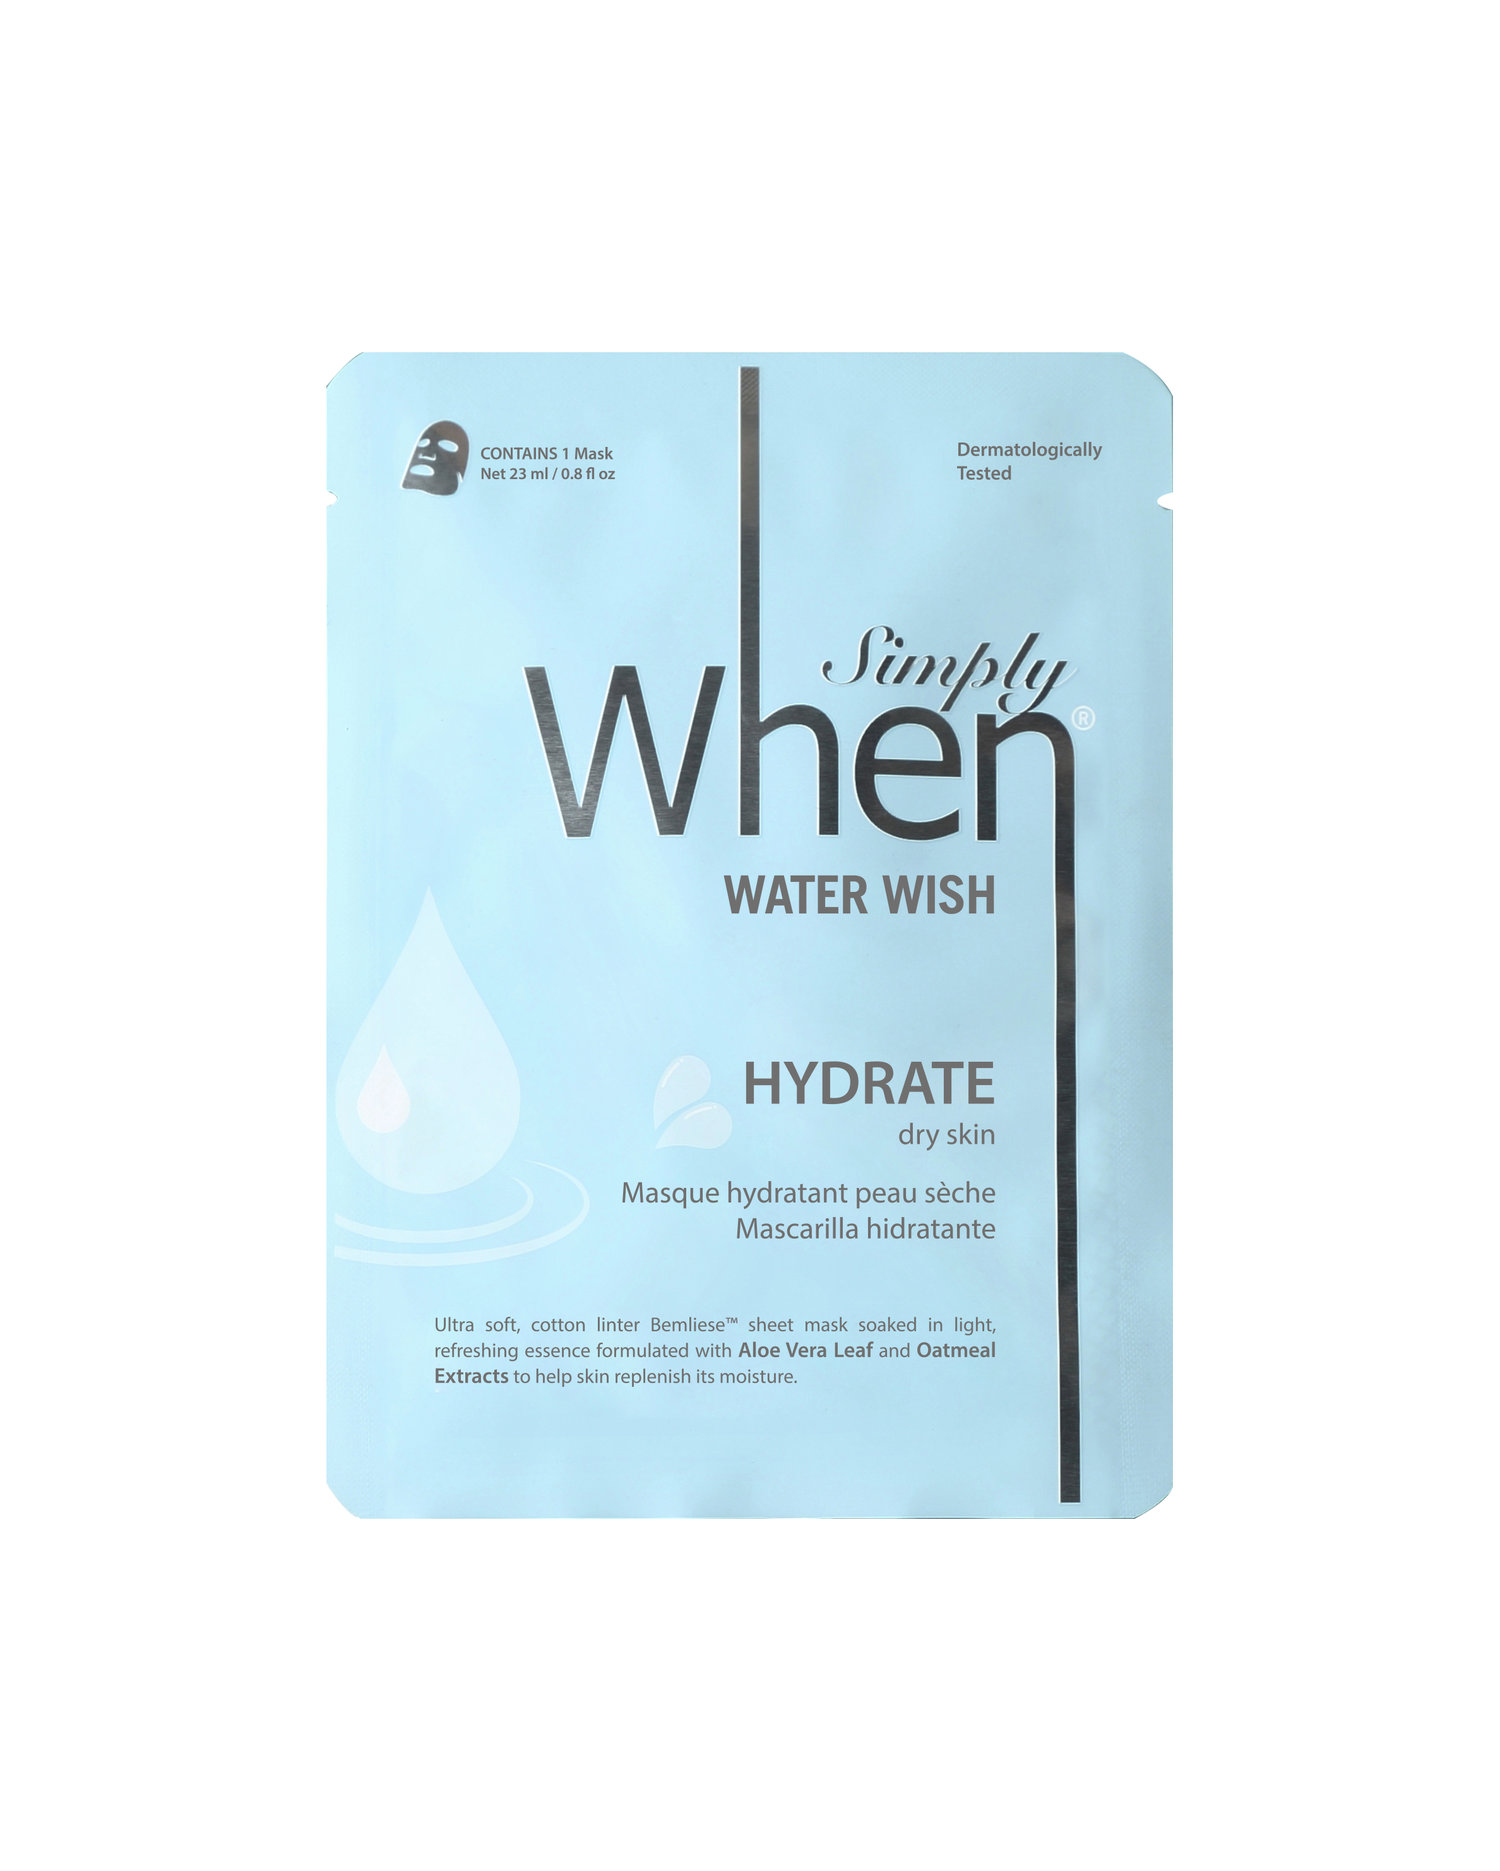 Sudan hypocrisy Tweet Masca coreeana hidratanta pentru ten uscat, Water Wish, 23 ml, Simply When  — BioCart